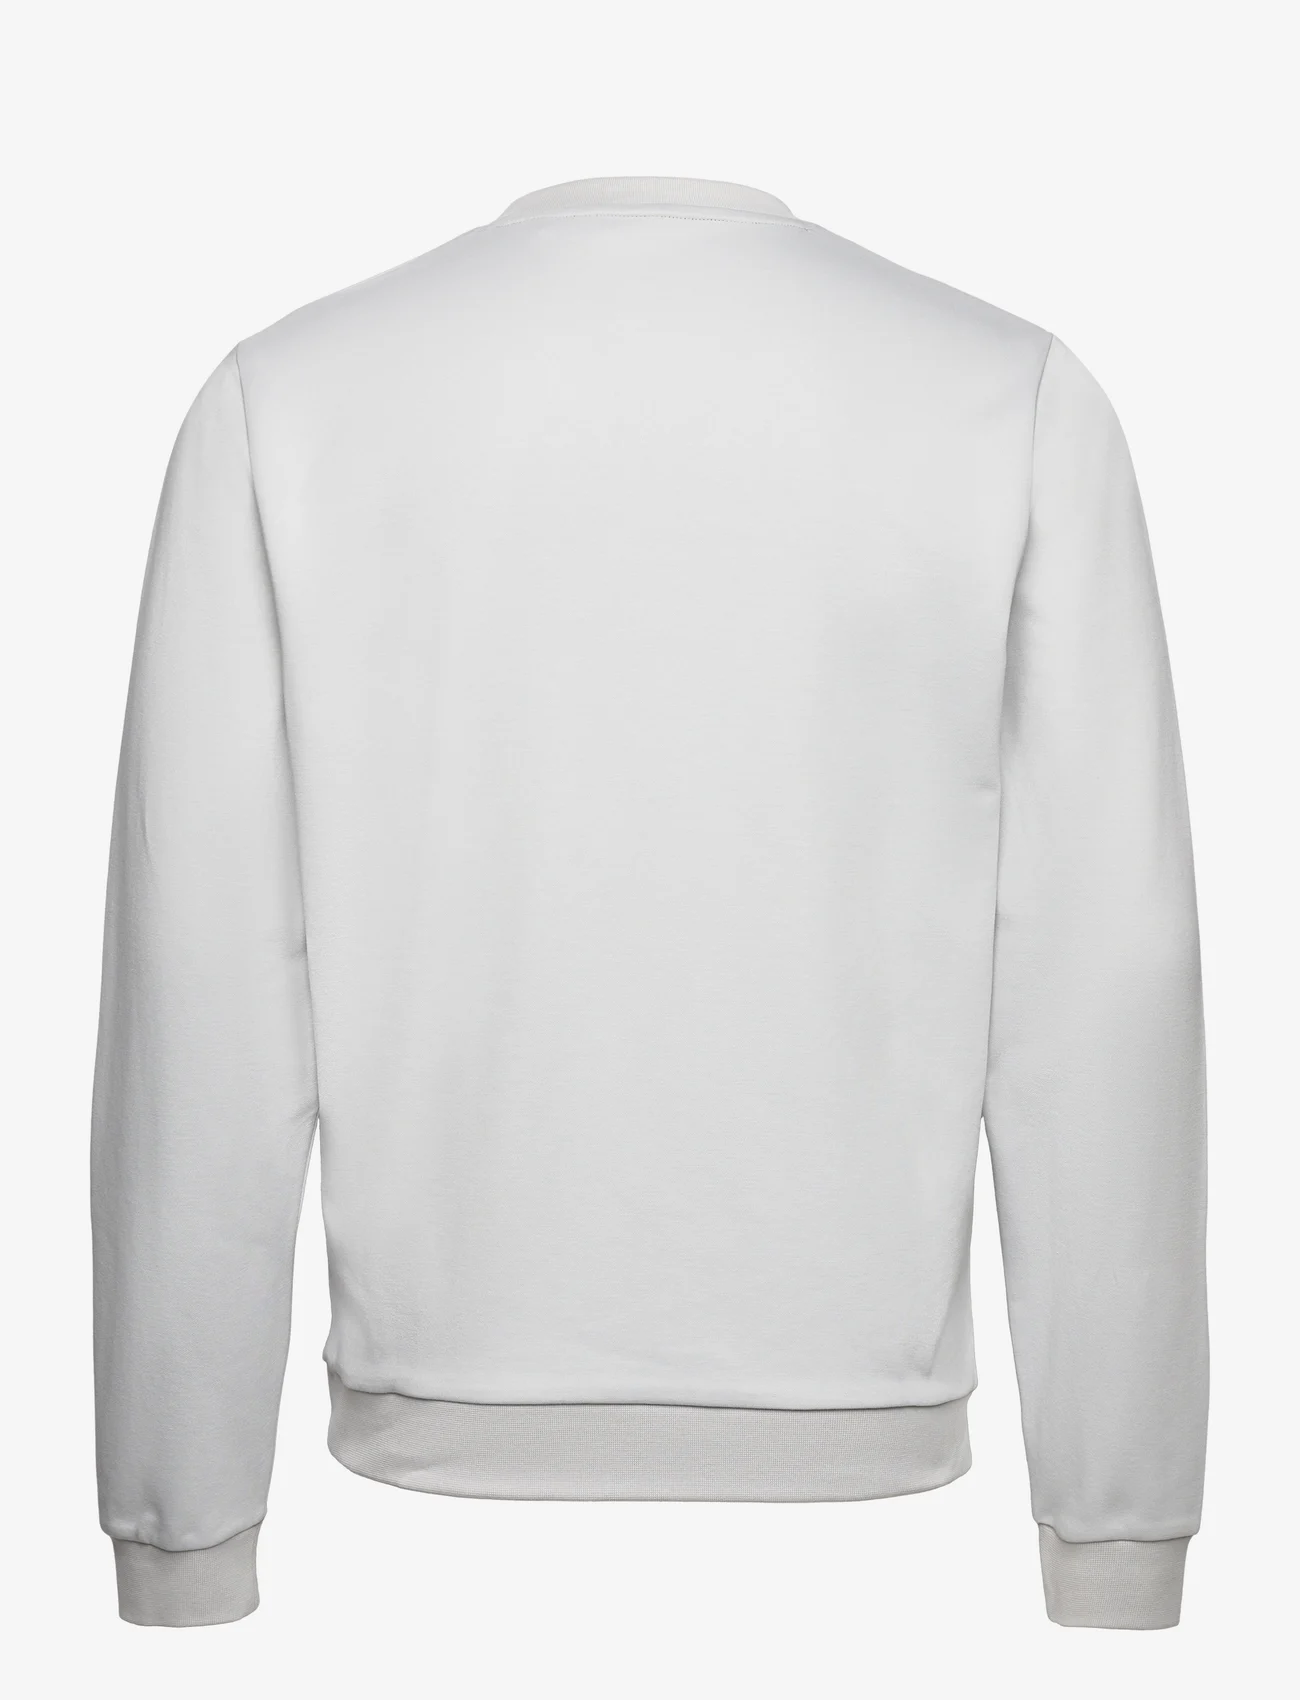 BOSS - Tracksuit Sweatshirt - sweatshirts - light/pastel grey - 1